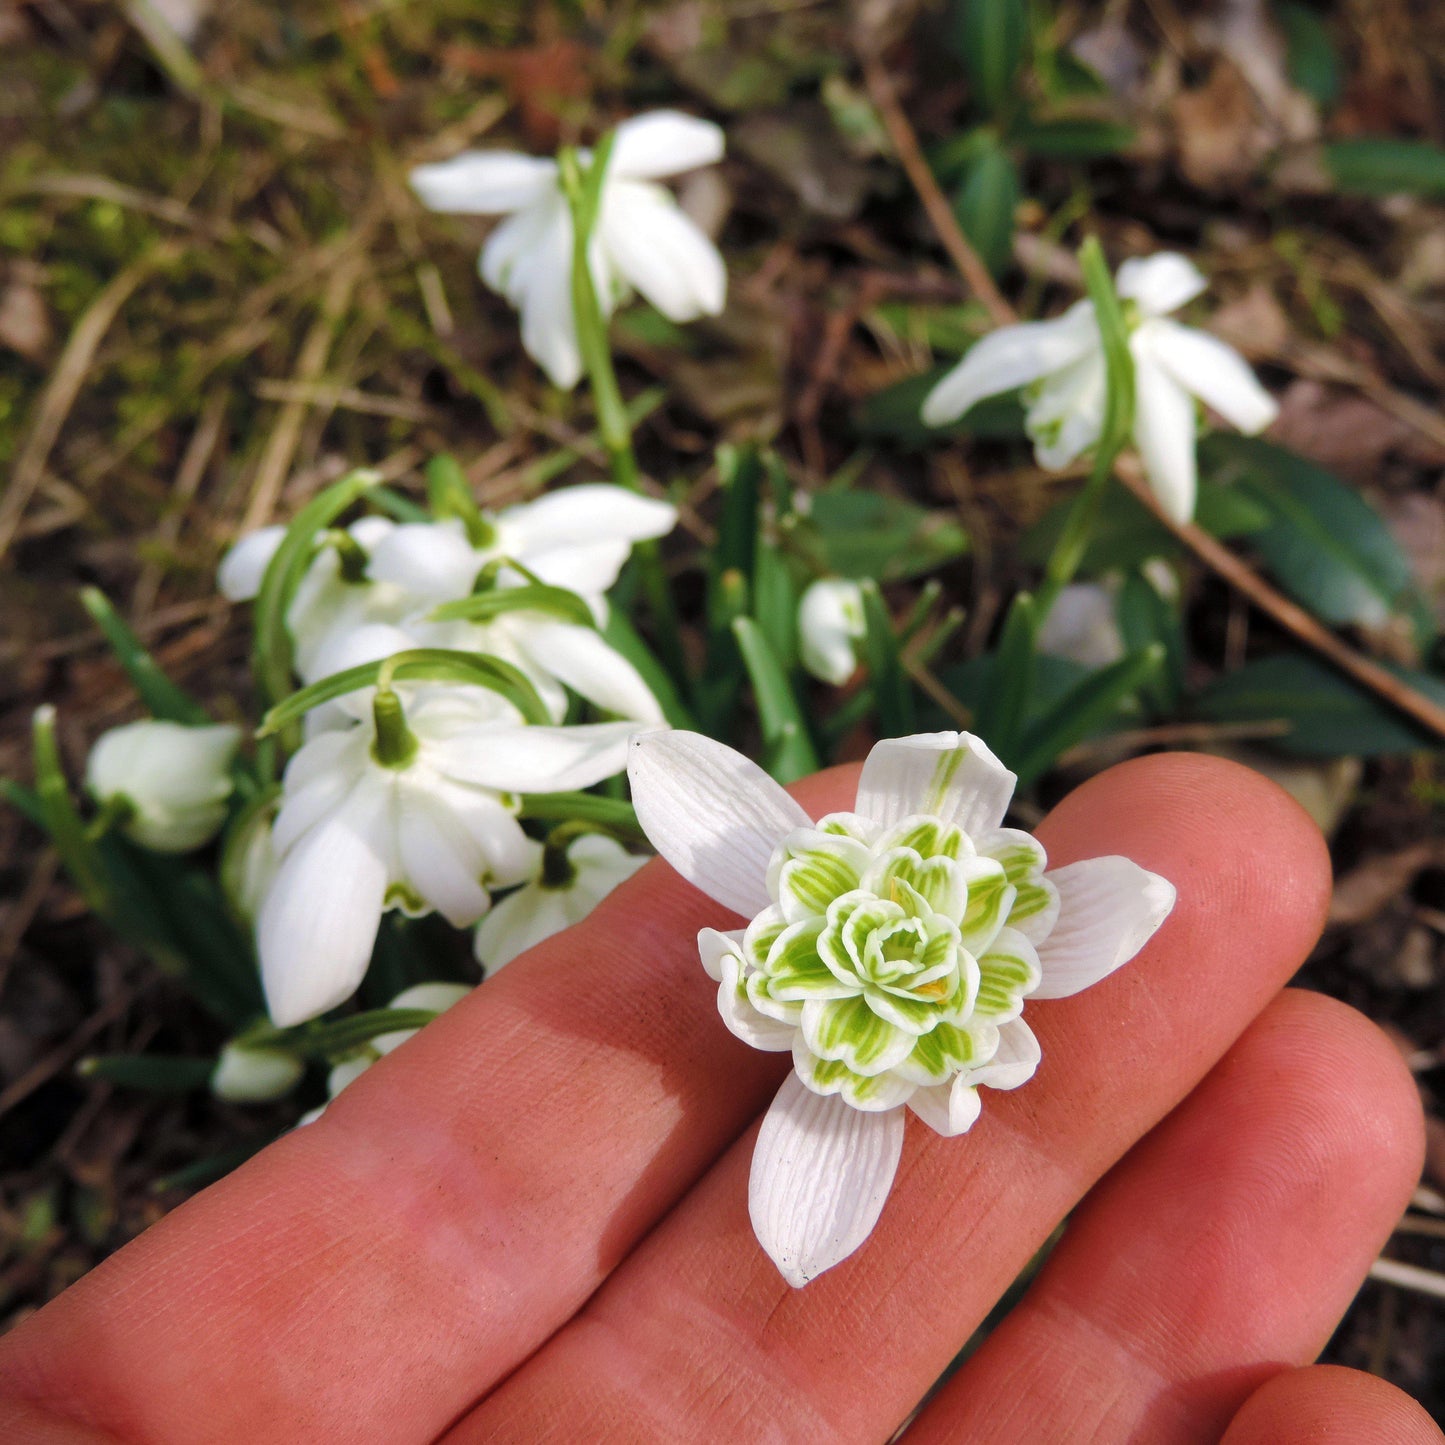 Galanthus Double Snowdrop "Flore Pleno"